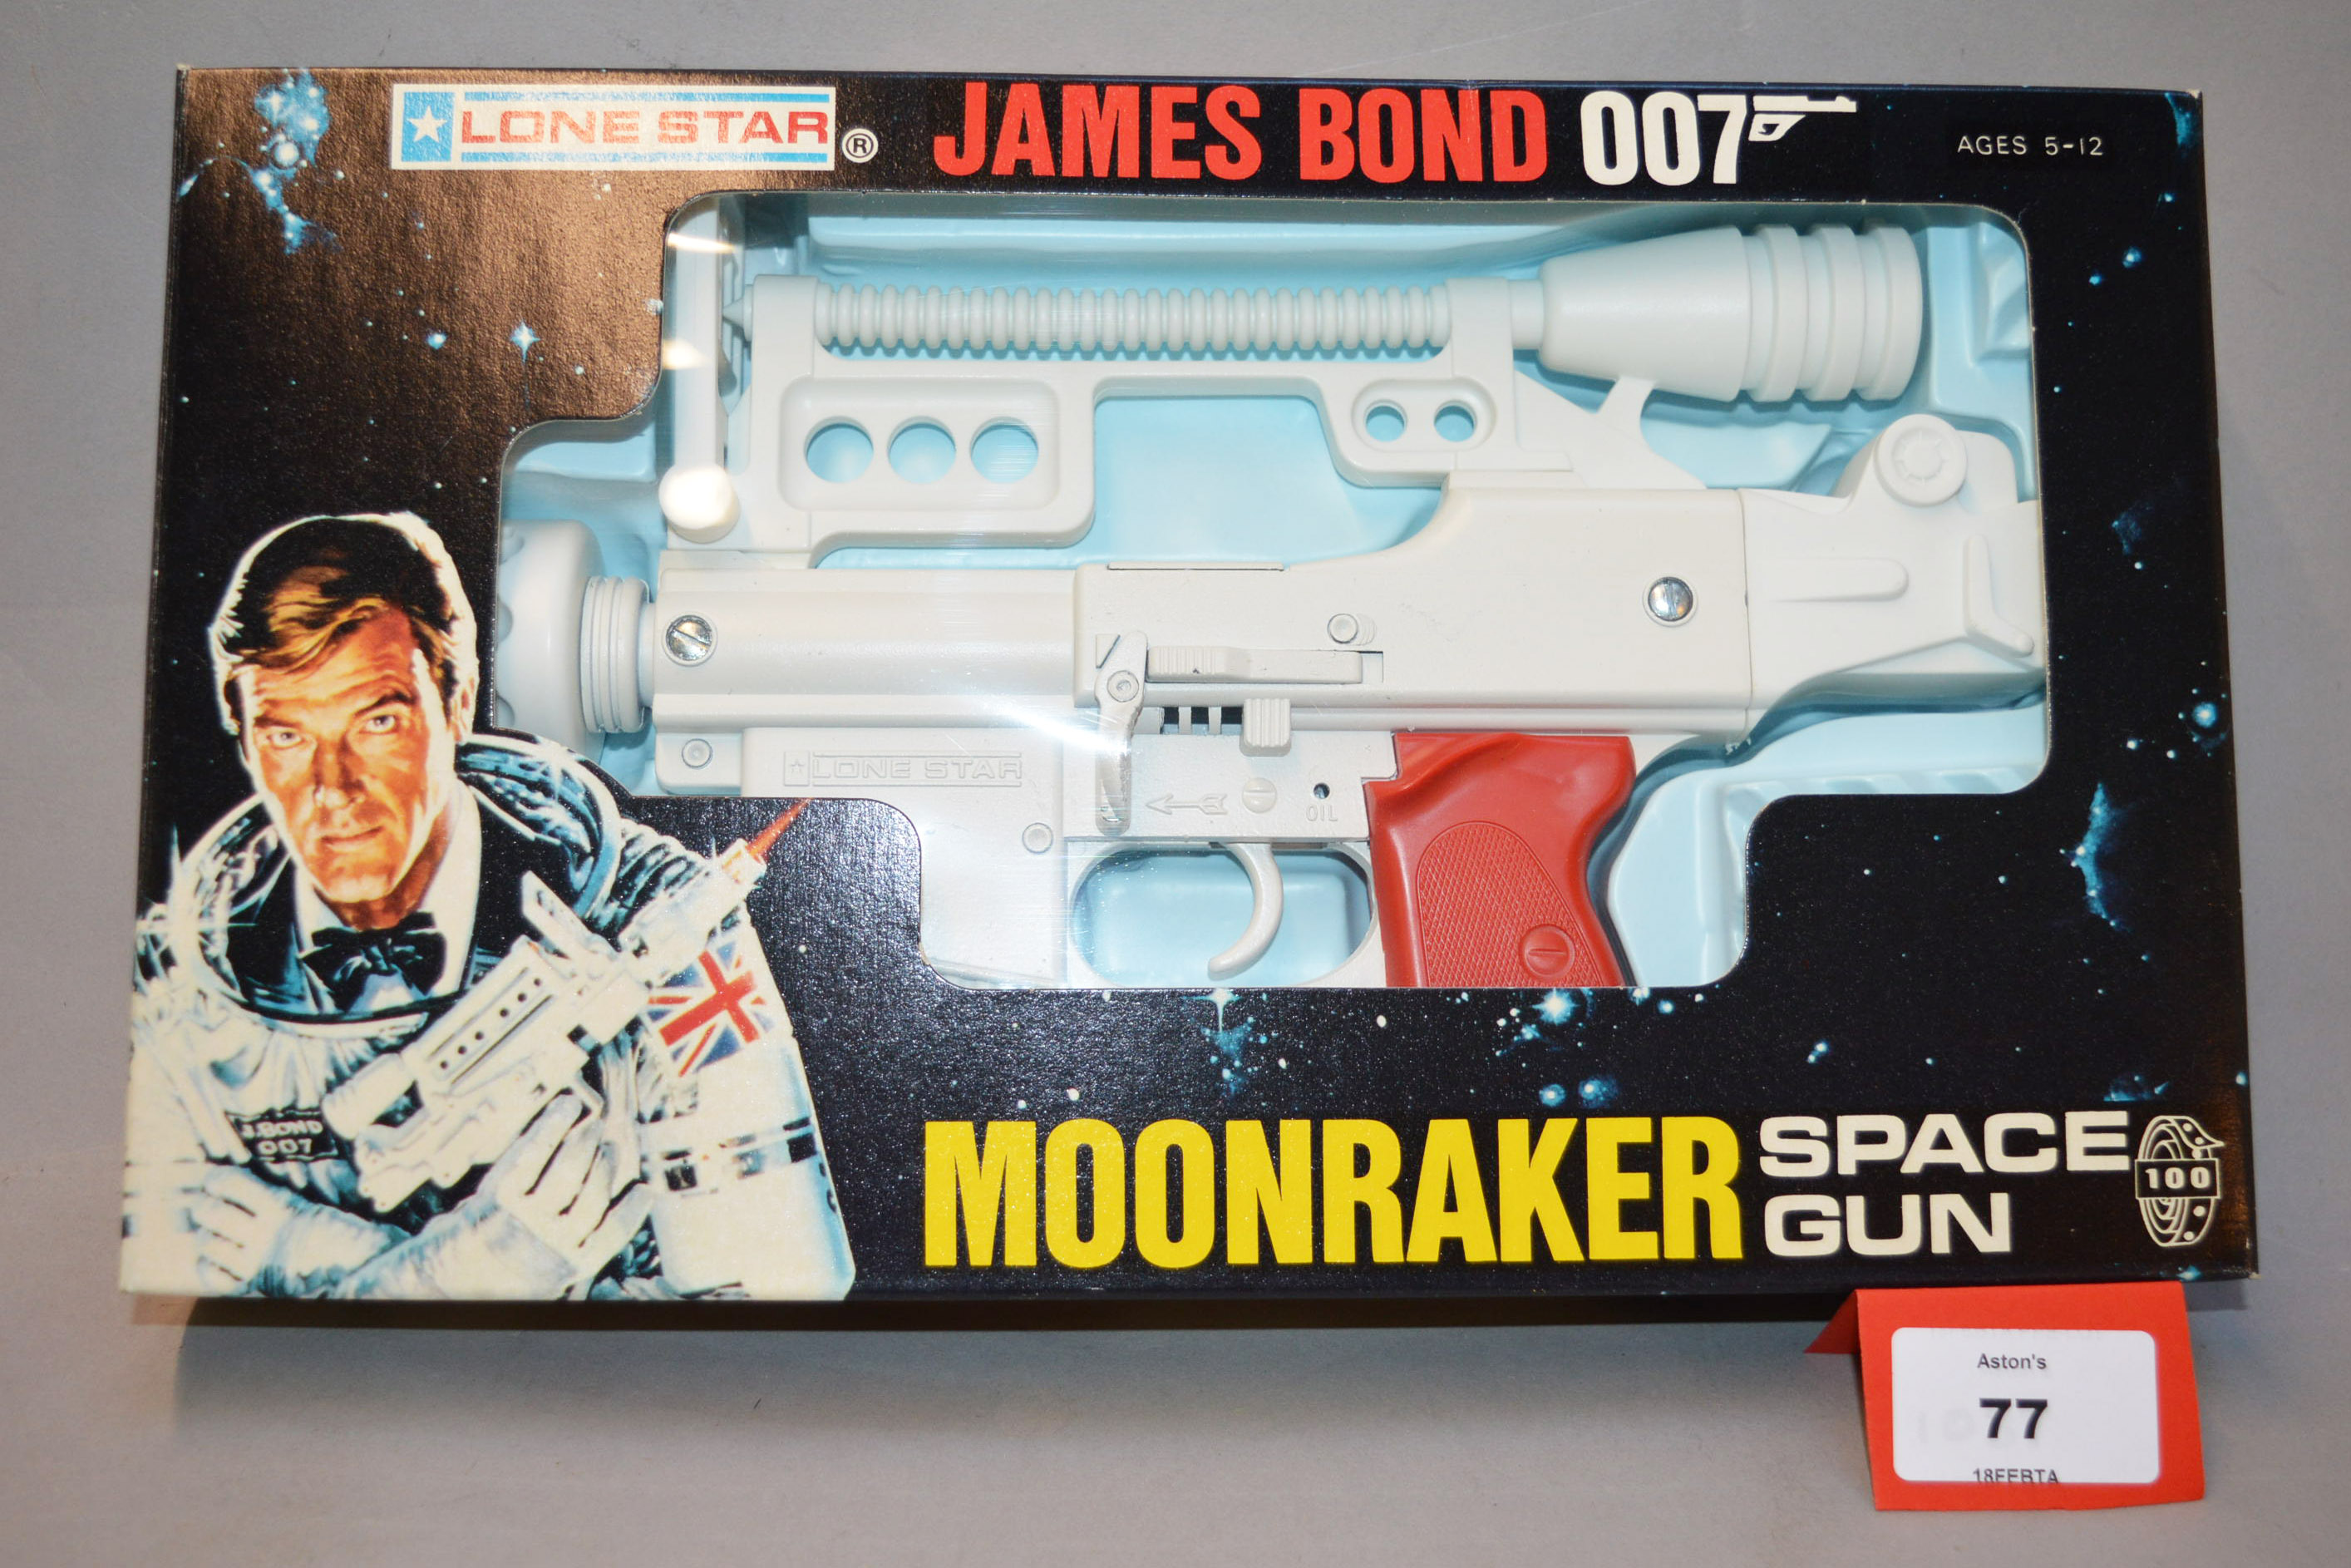 Lone Star James Bond 007 Moonraker Space Gun,1979.